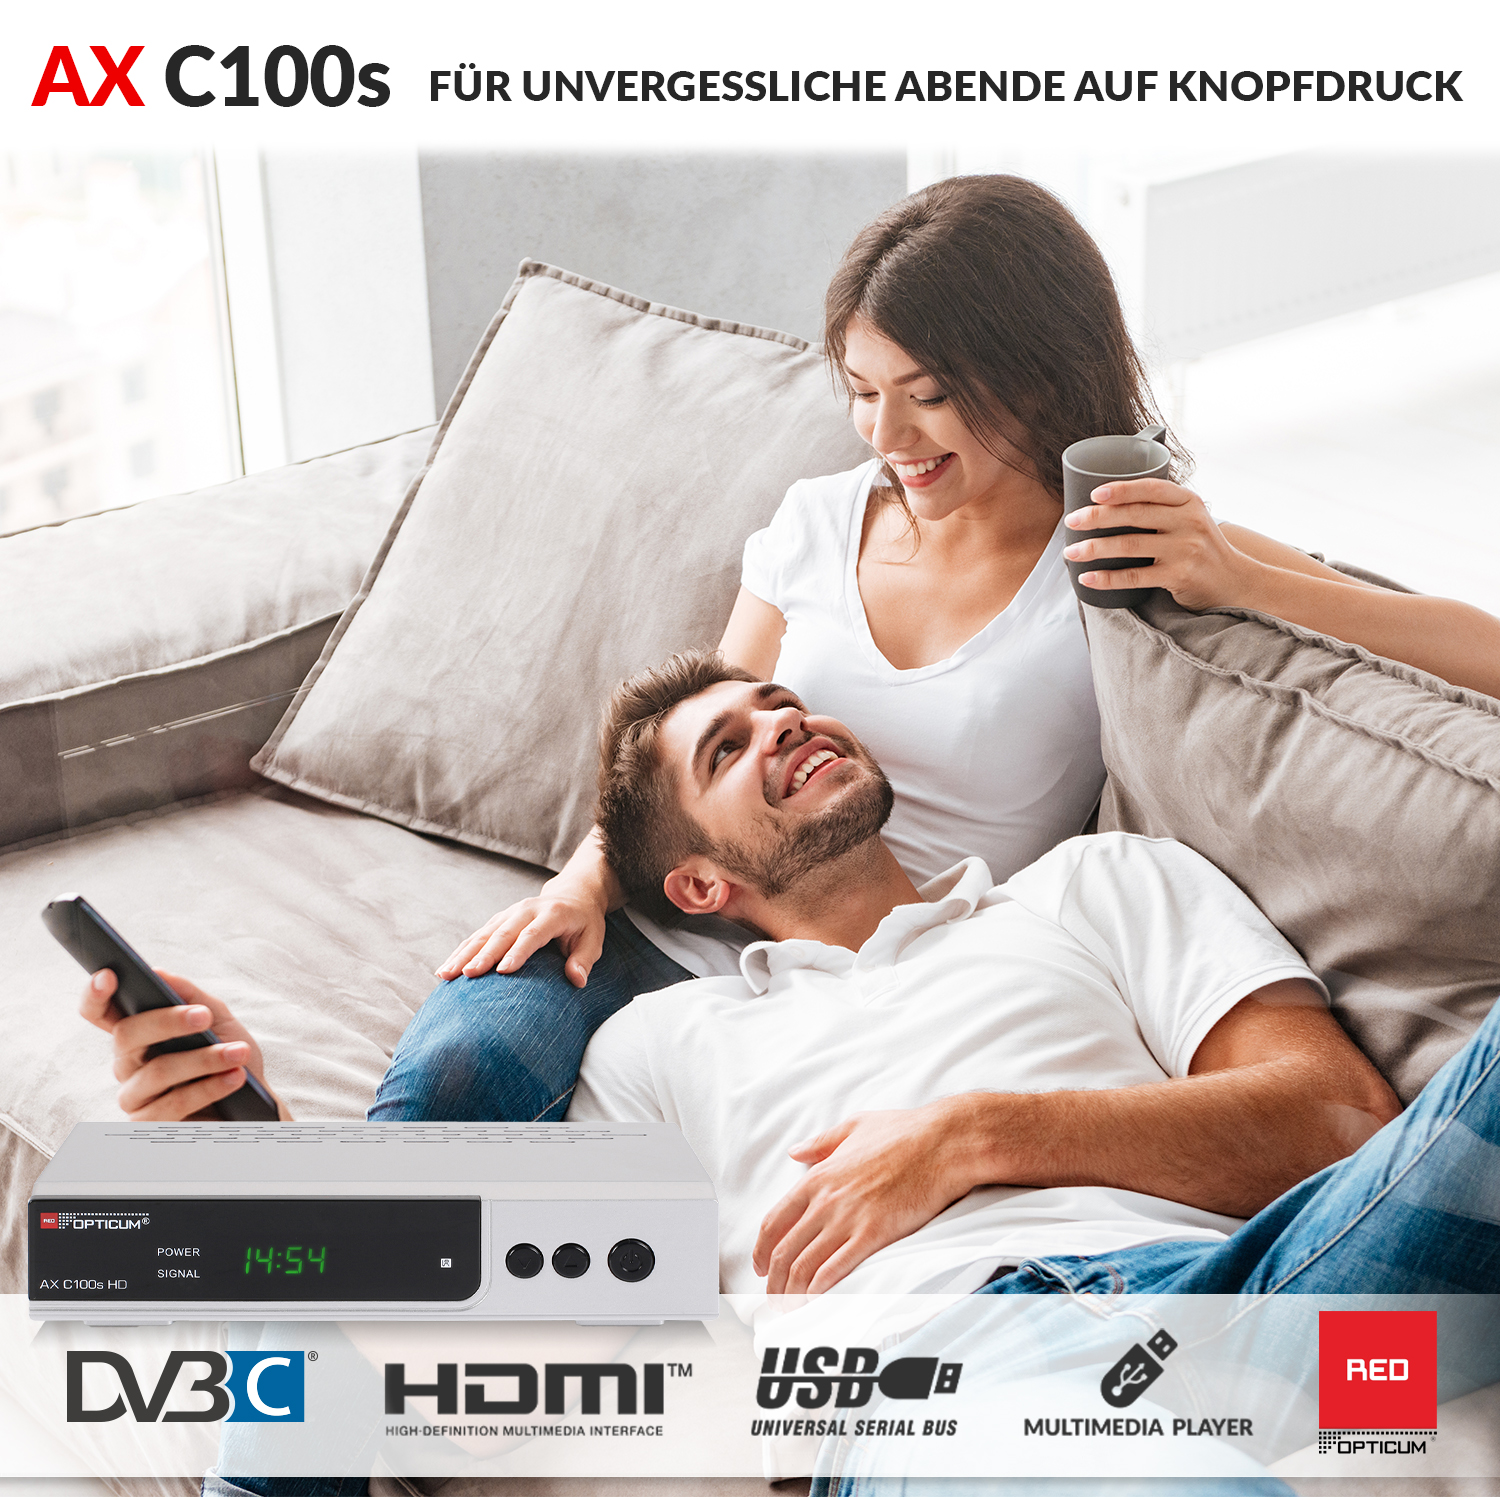 HD-EPG-HDMI-USB-SCART Receiver OPTICUM DVB-C, (HDTV, Kabelreceiver PVR-Funktion, DVB-C silber) RED PVR-Aufnahmefunktion Kabel-Receiver C100s I DVB-C2, mit HD AX Digitaler